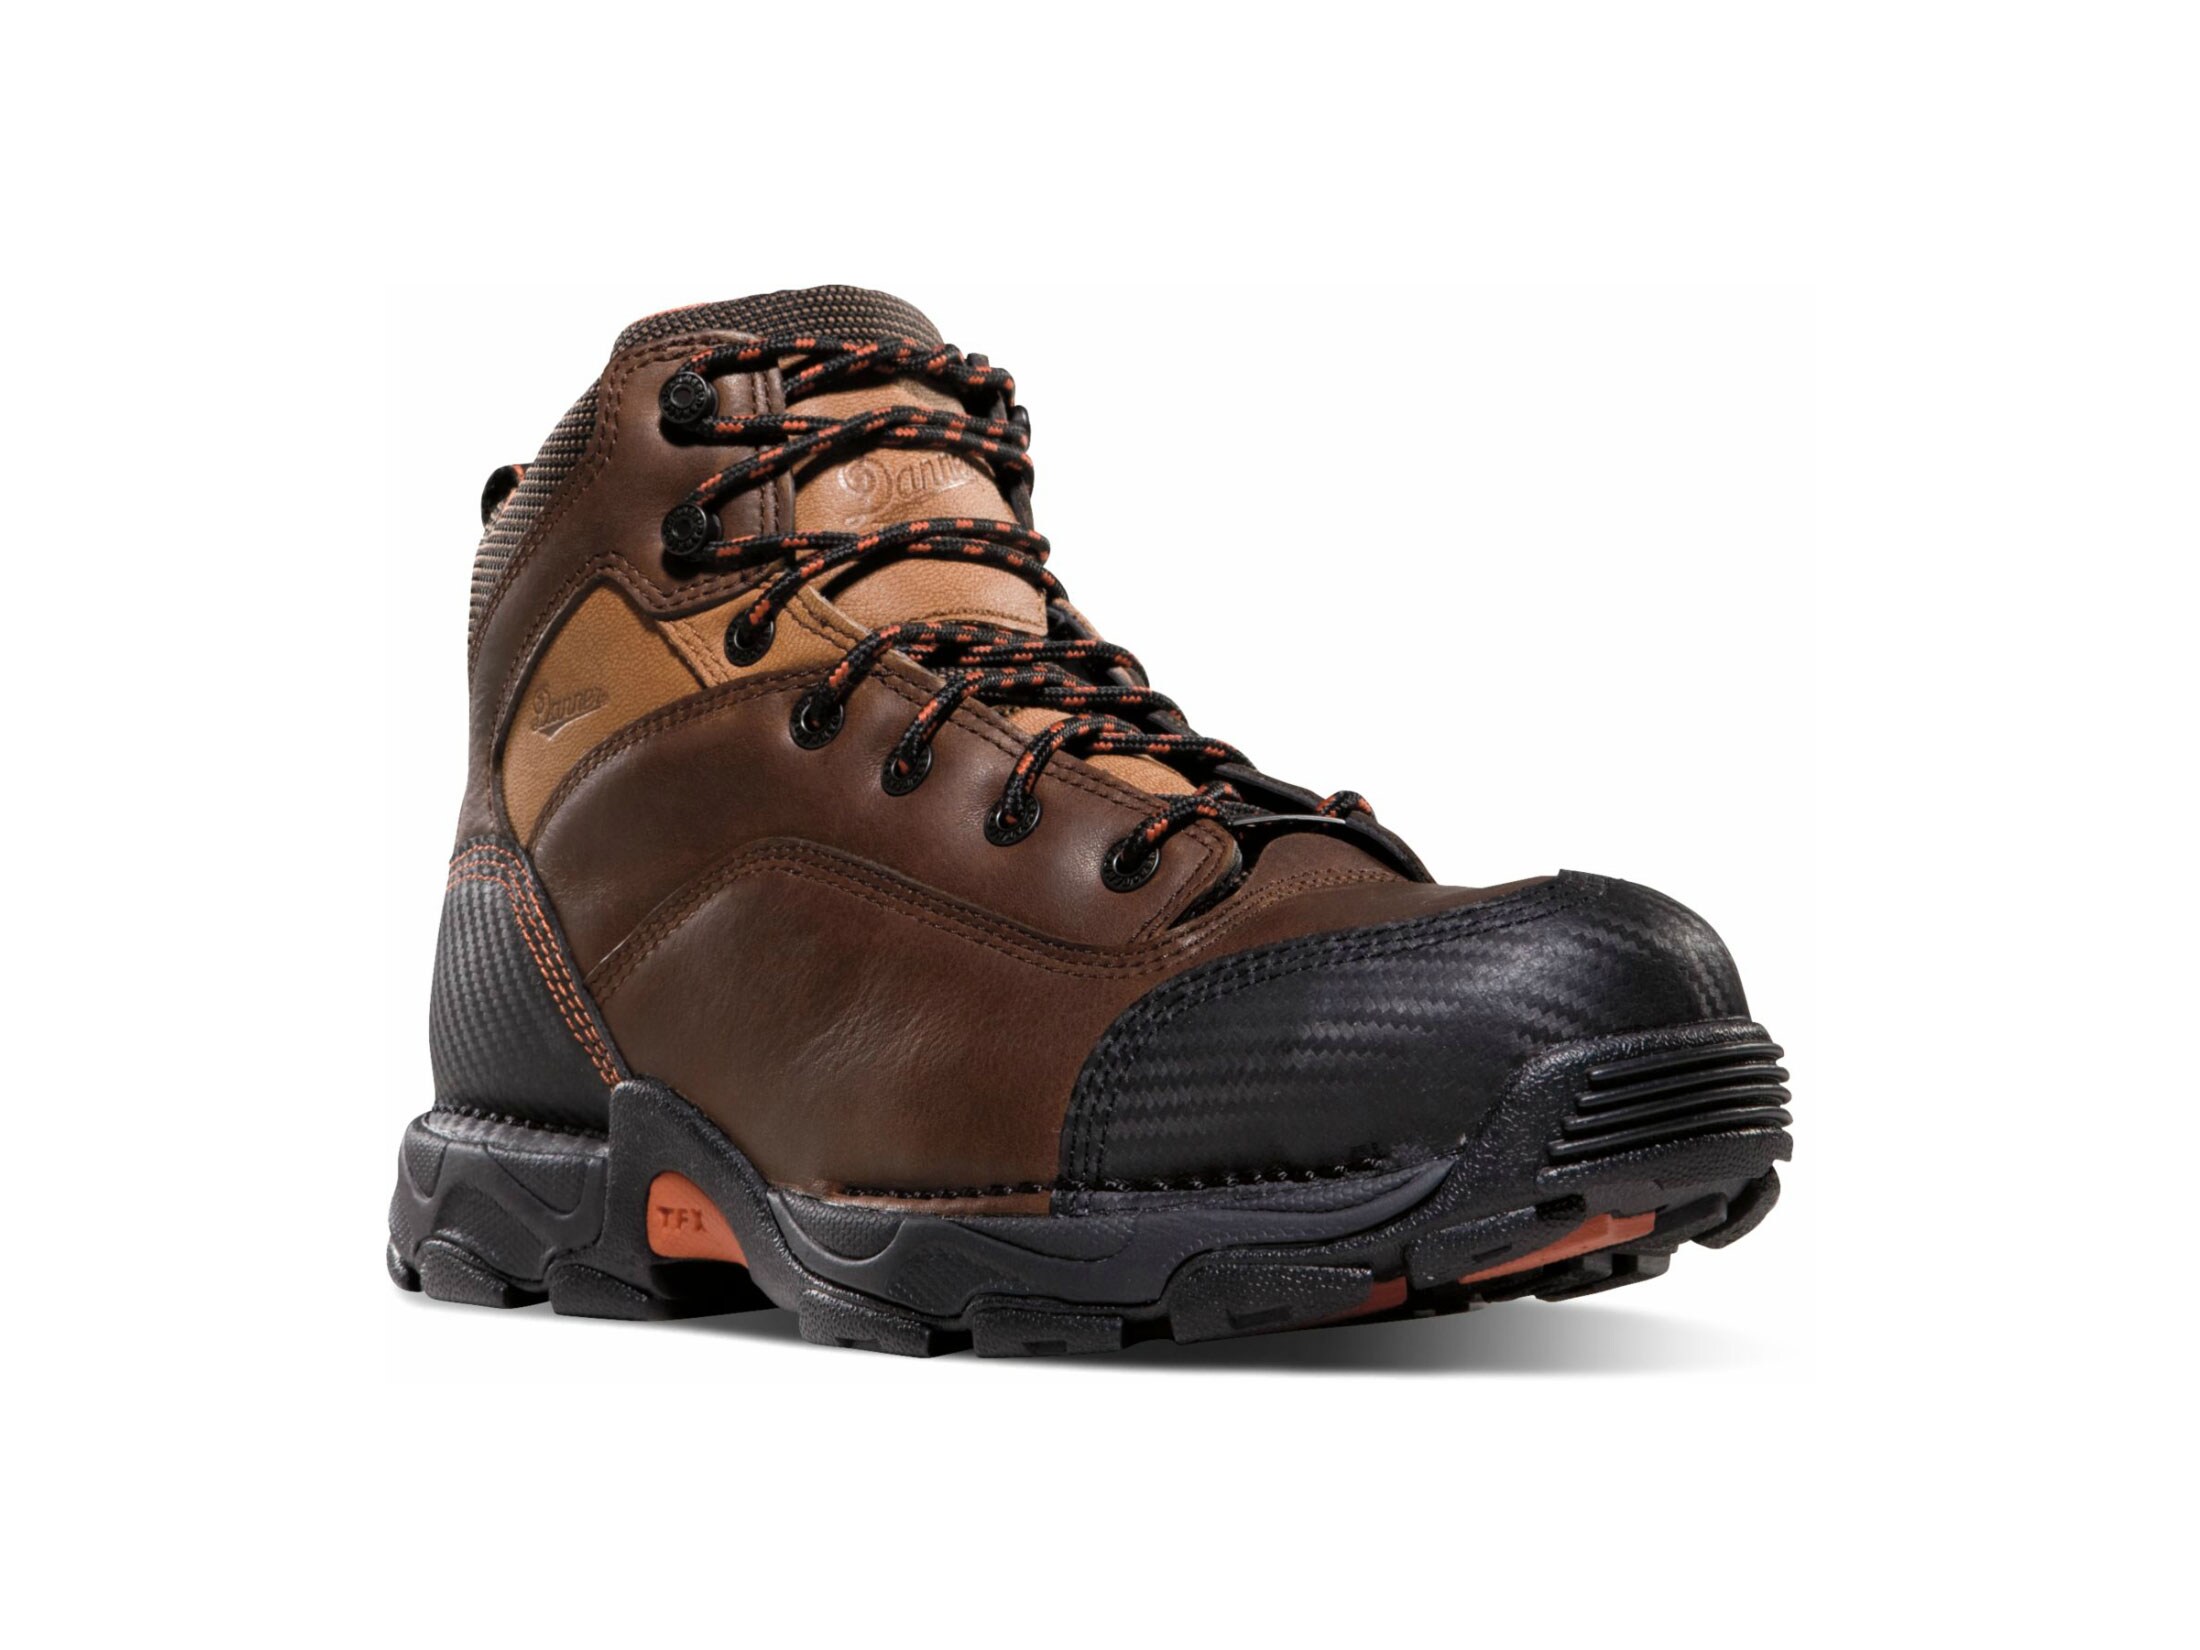 Danner Corvallis 5 GORE-TEX Hiking Boots Leather Nylon Men's 9 D